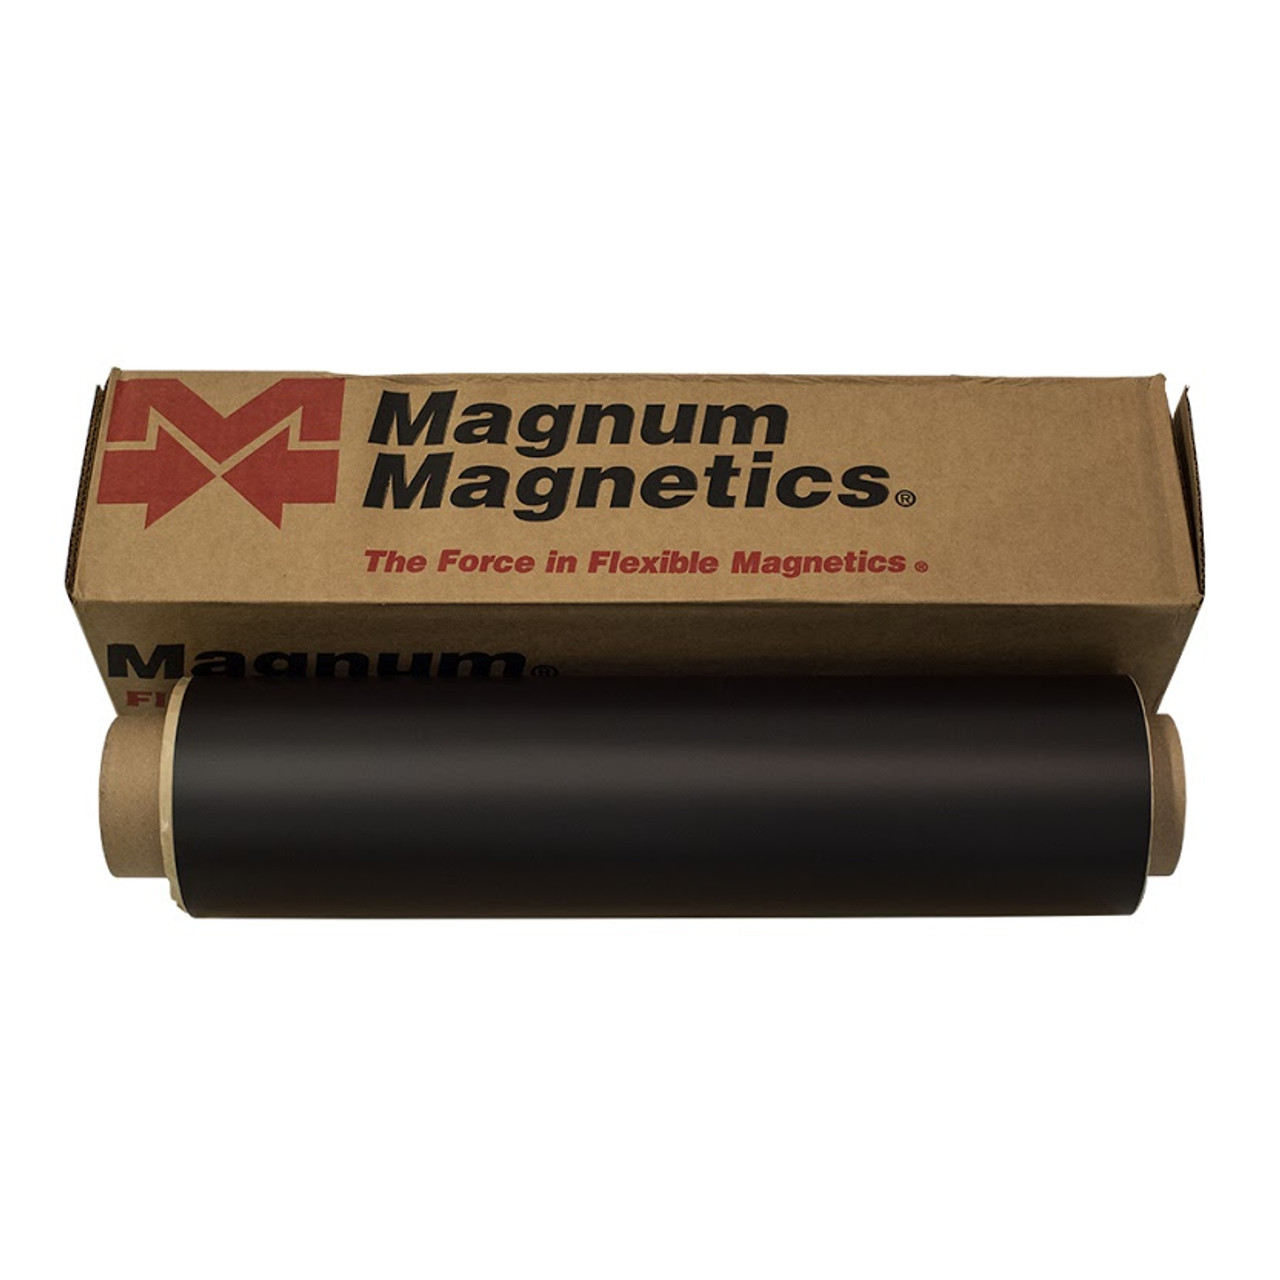 24 X 5' Roll Magnetic Sheeting - Magnum Magnetics 